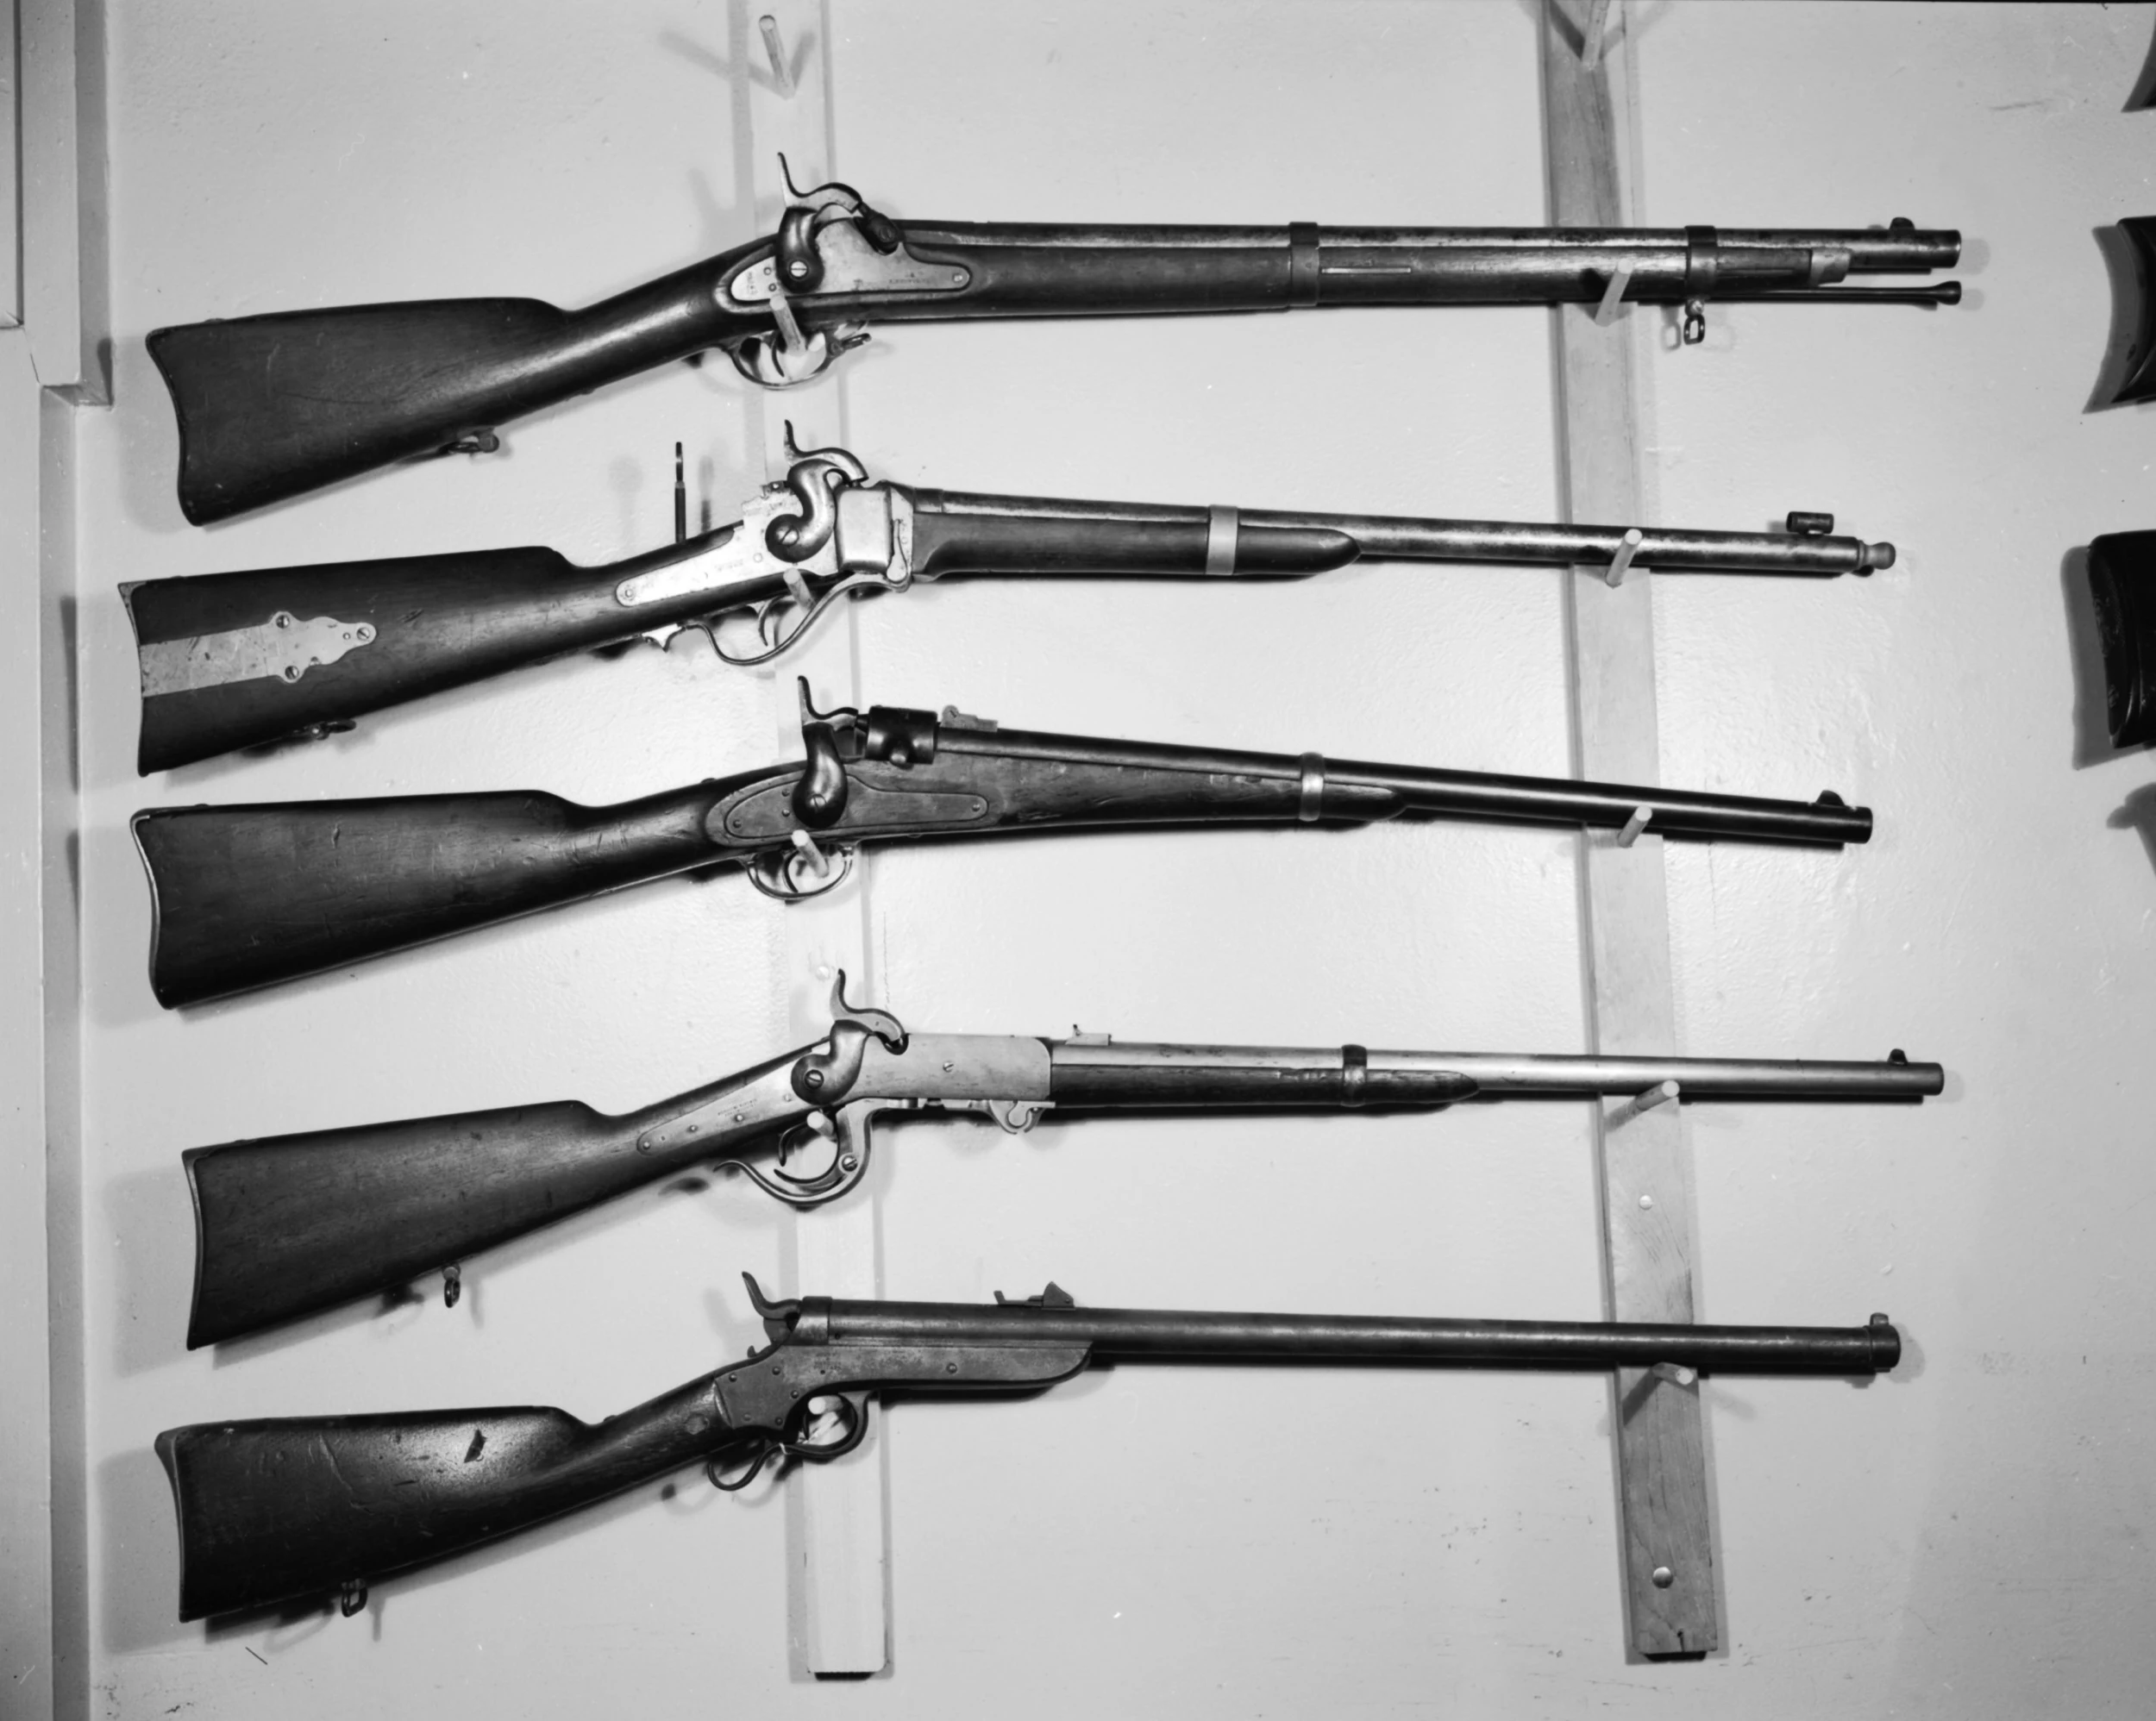 Rare Winchester Rifle Found In Nevada State Park